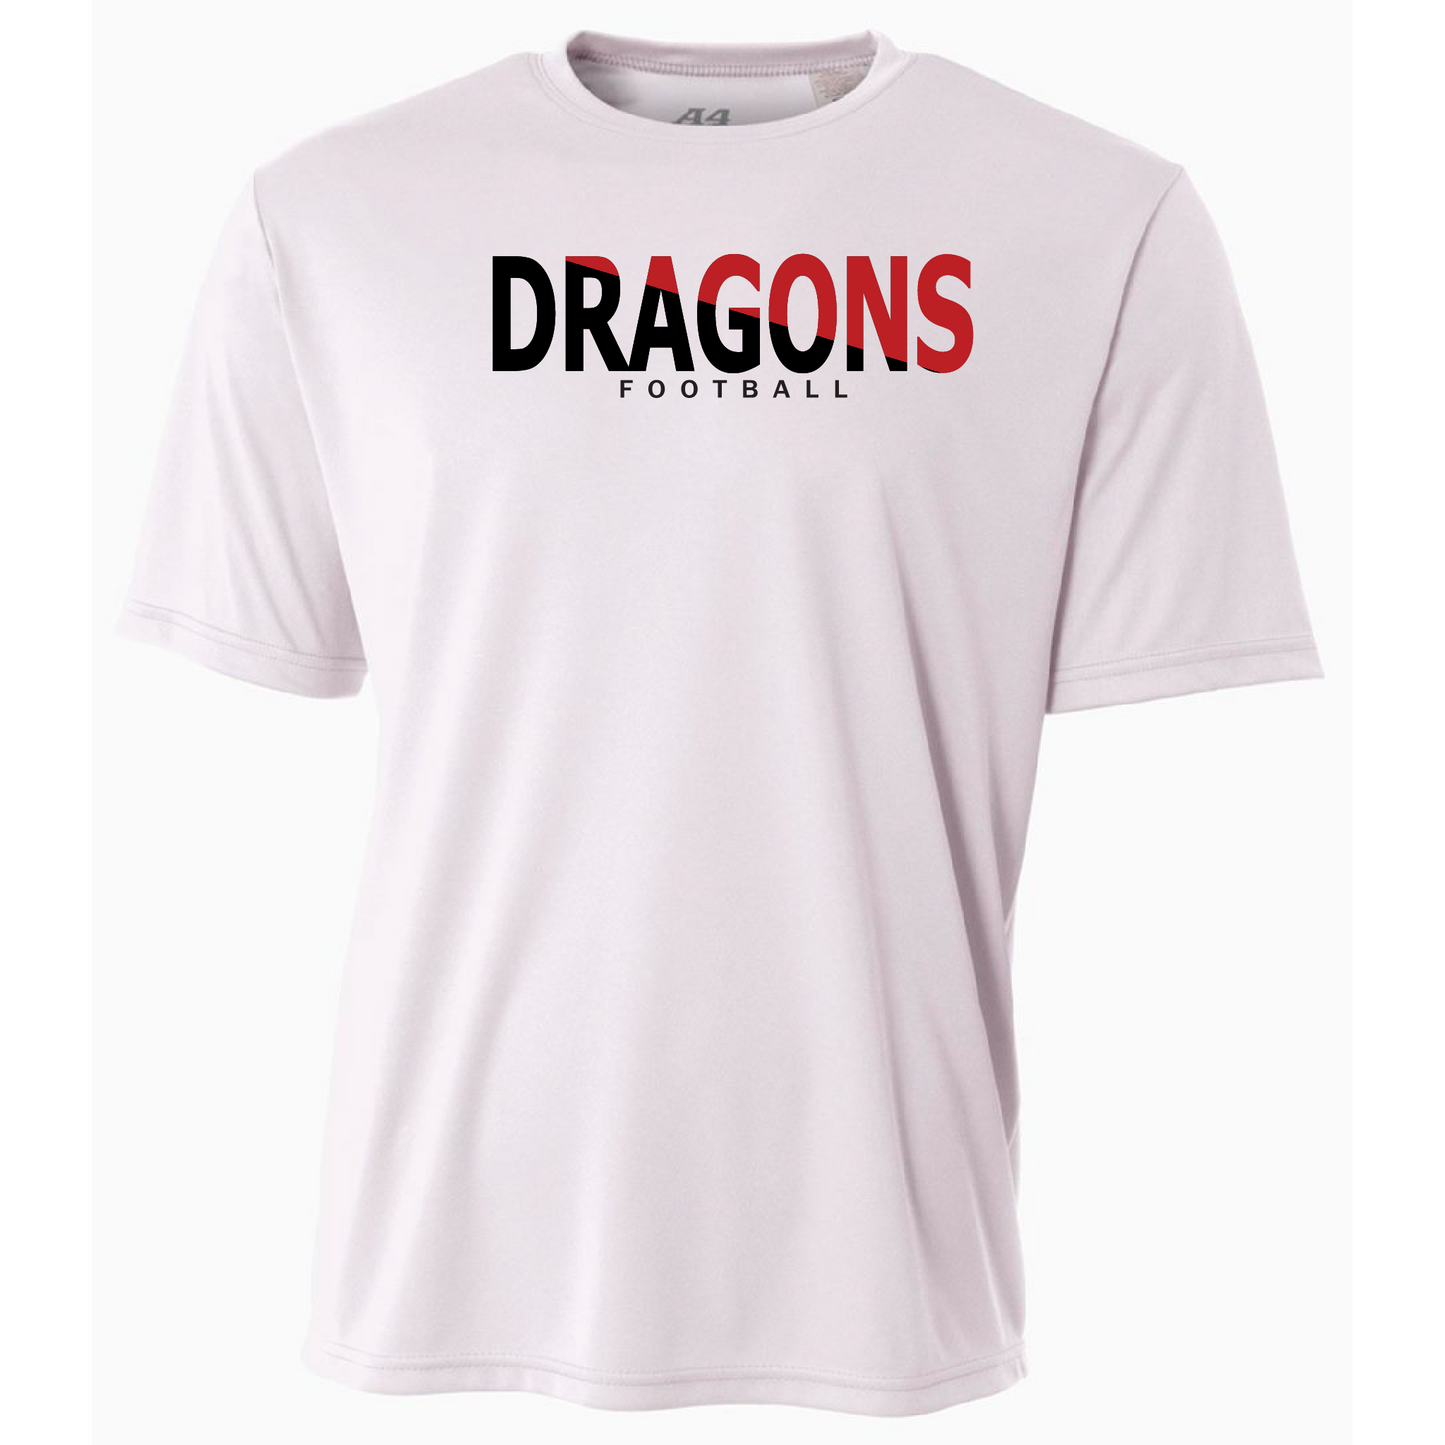 Mens S/S T-Shirt - Dragons Football